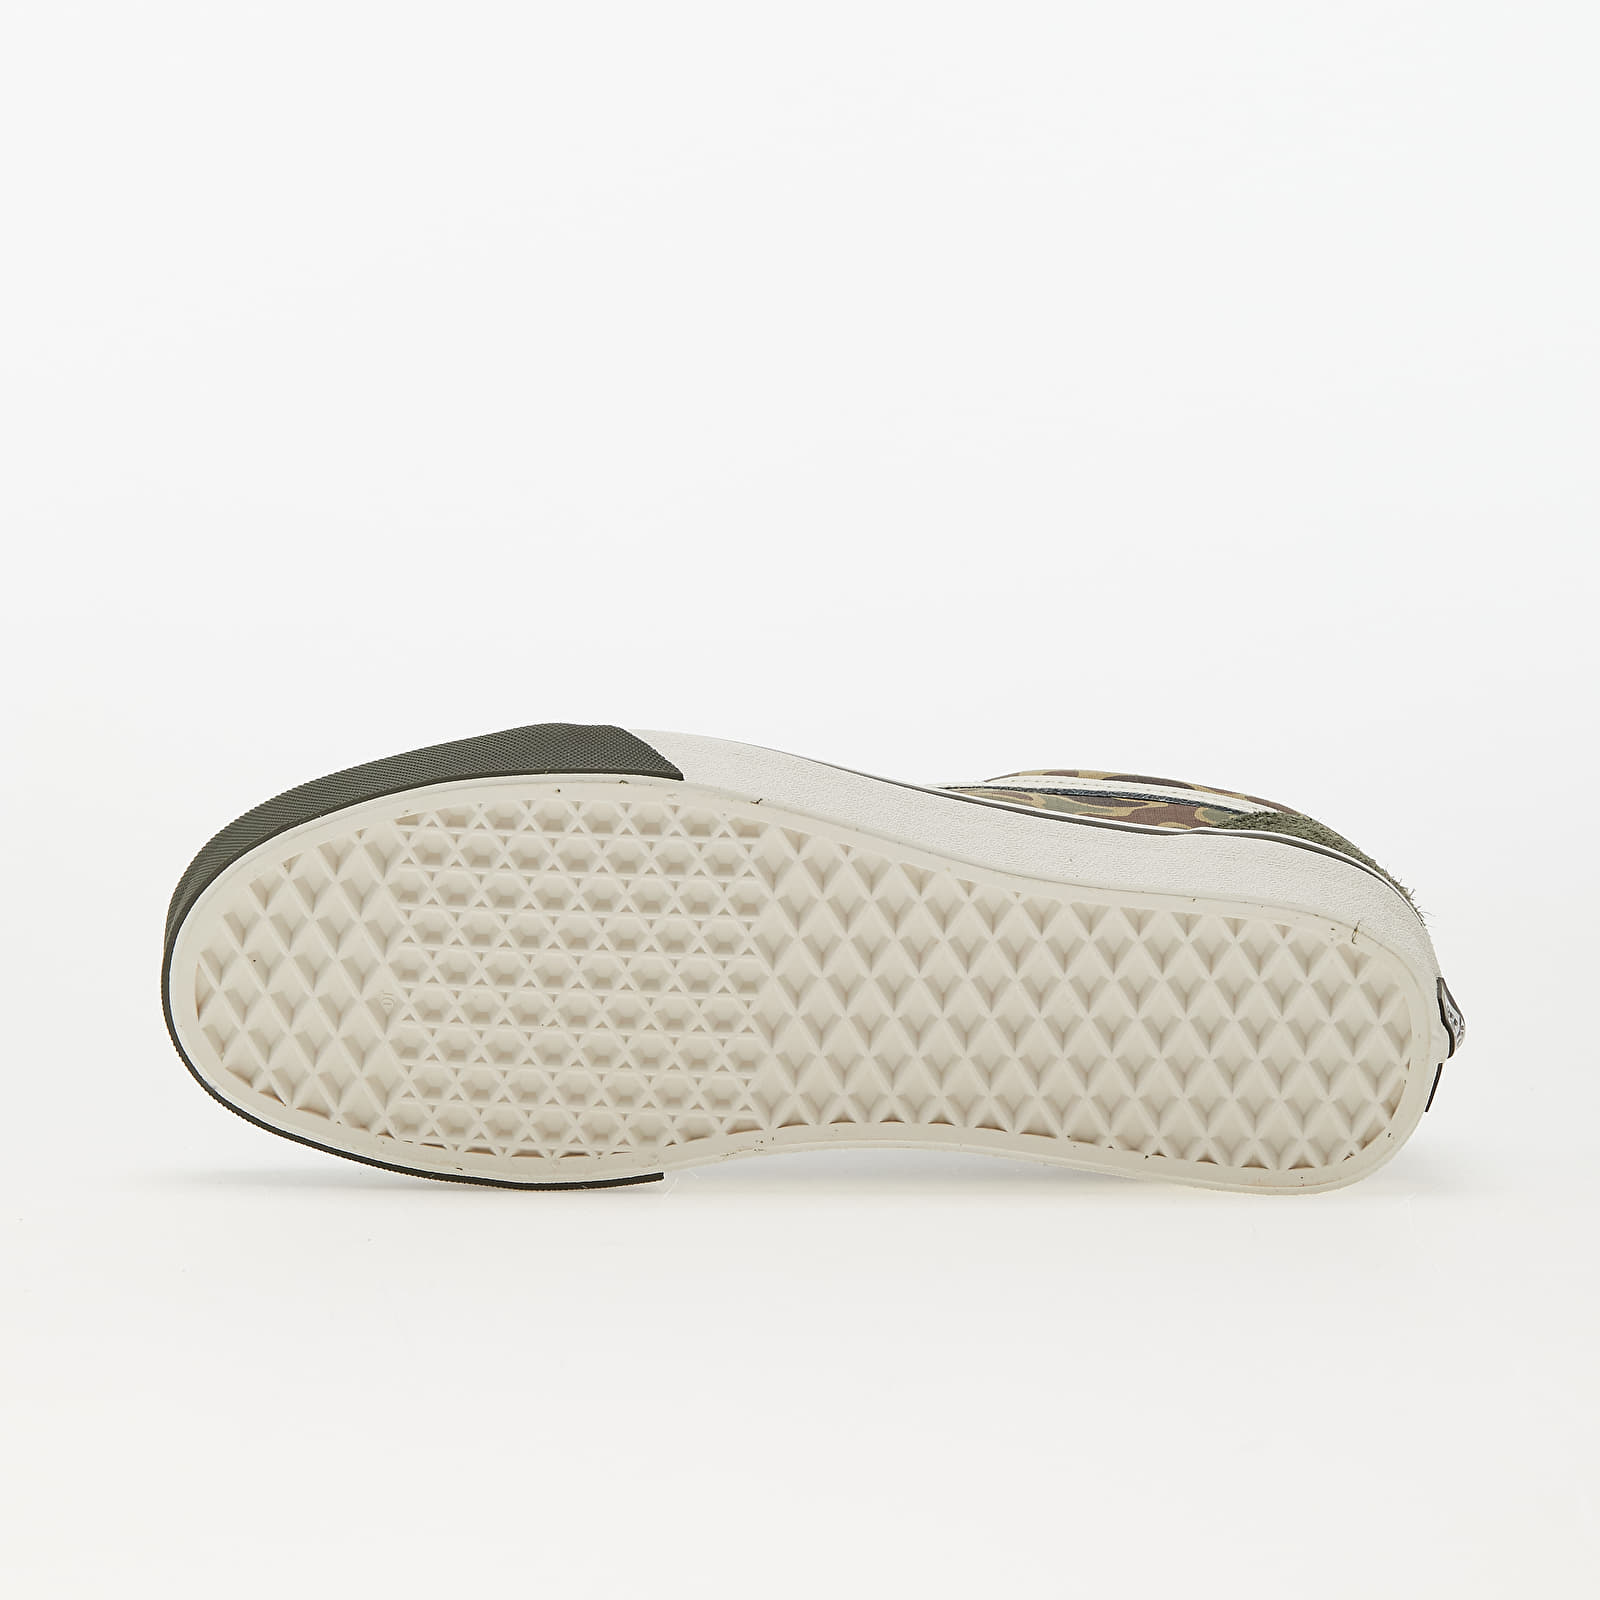 Men's shoes Vans Old Skool Grape Leaf/ Marshmallow | Queens